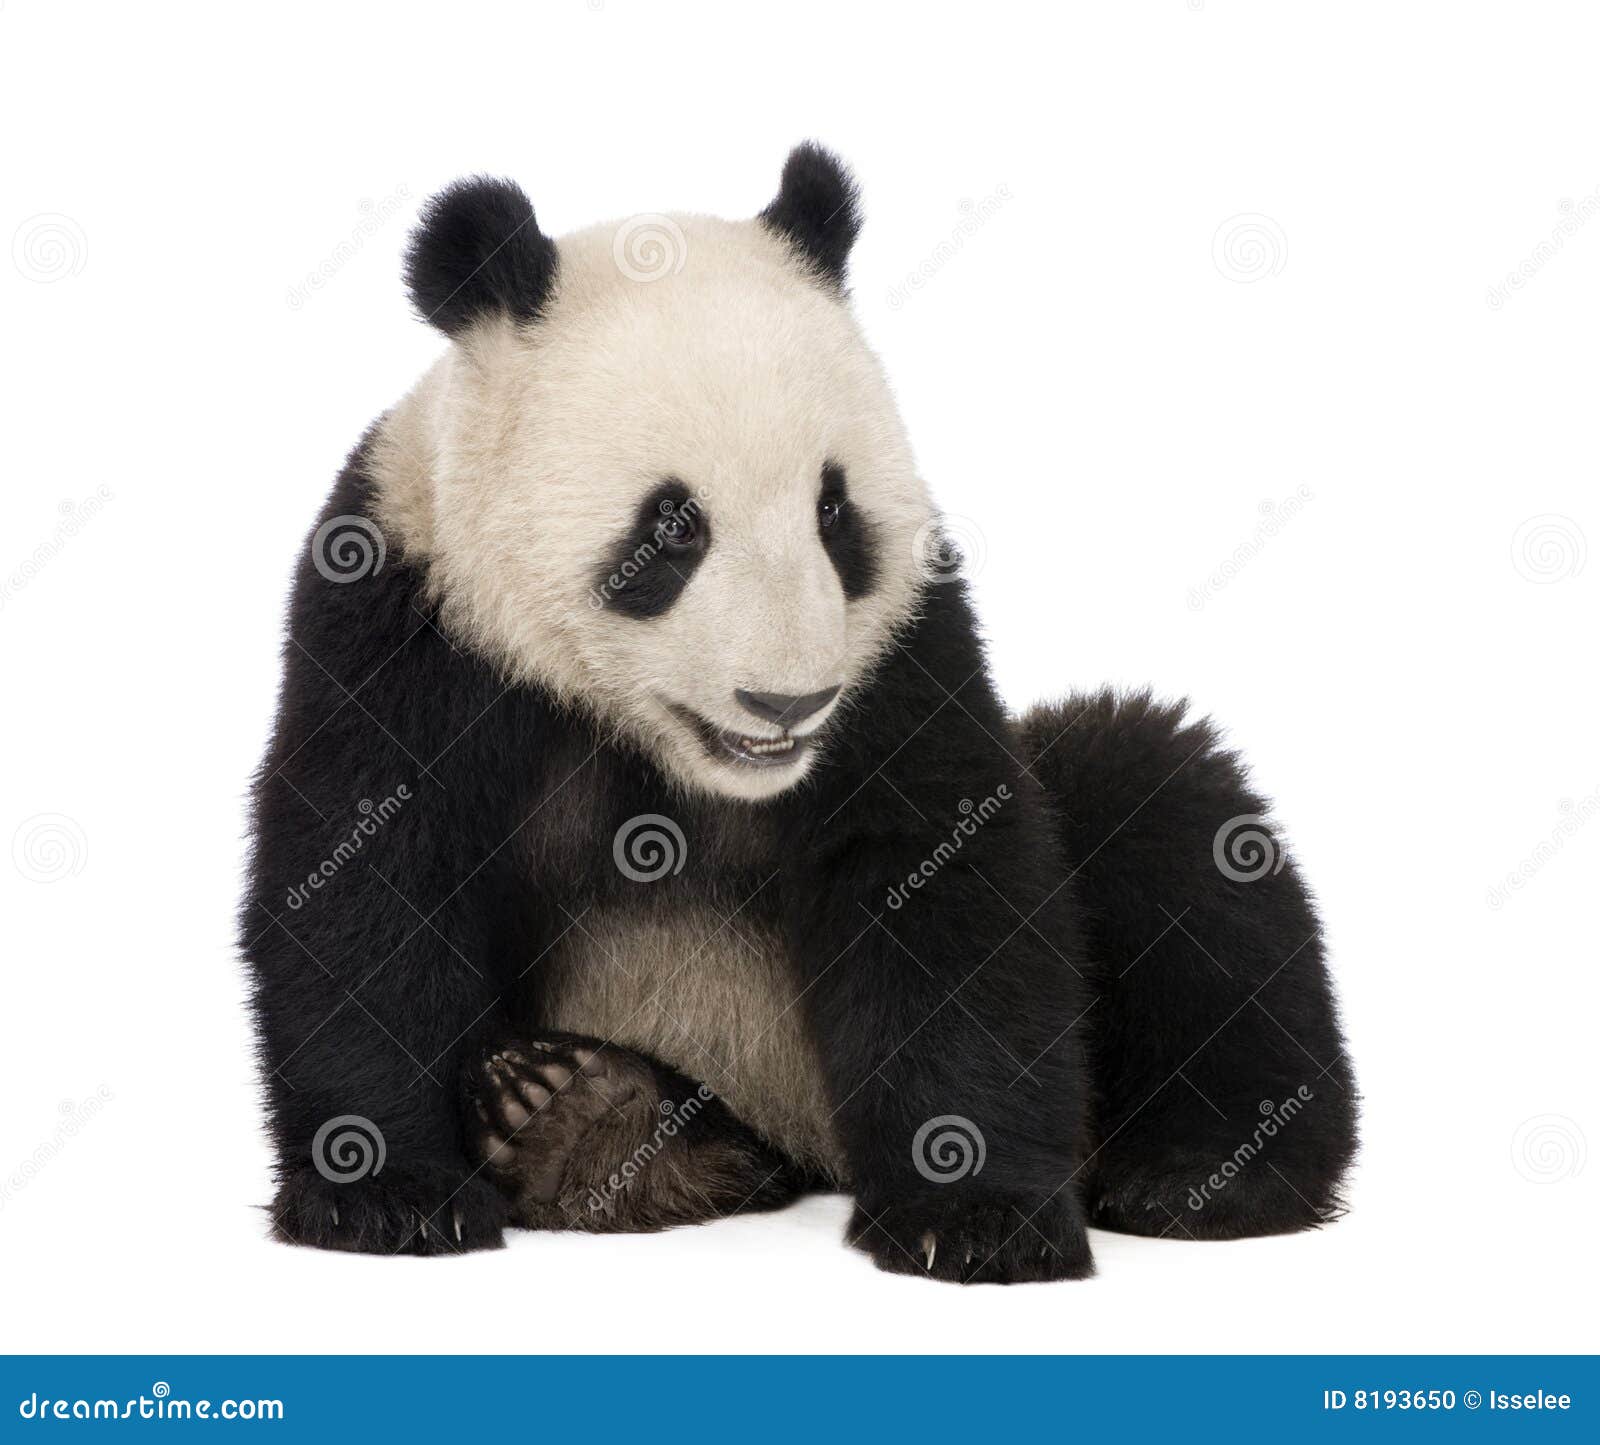 giant panda (18 months) - ailuropoda melanoleuca